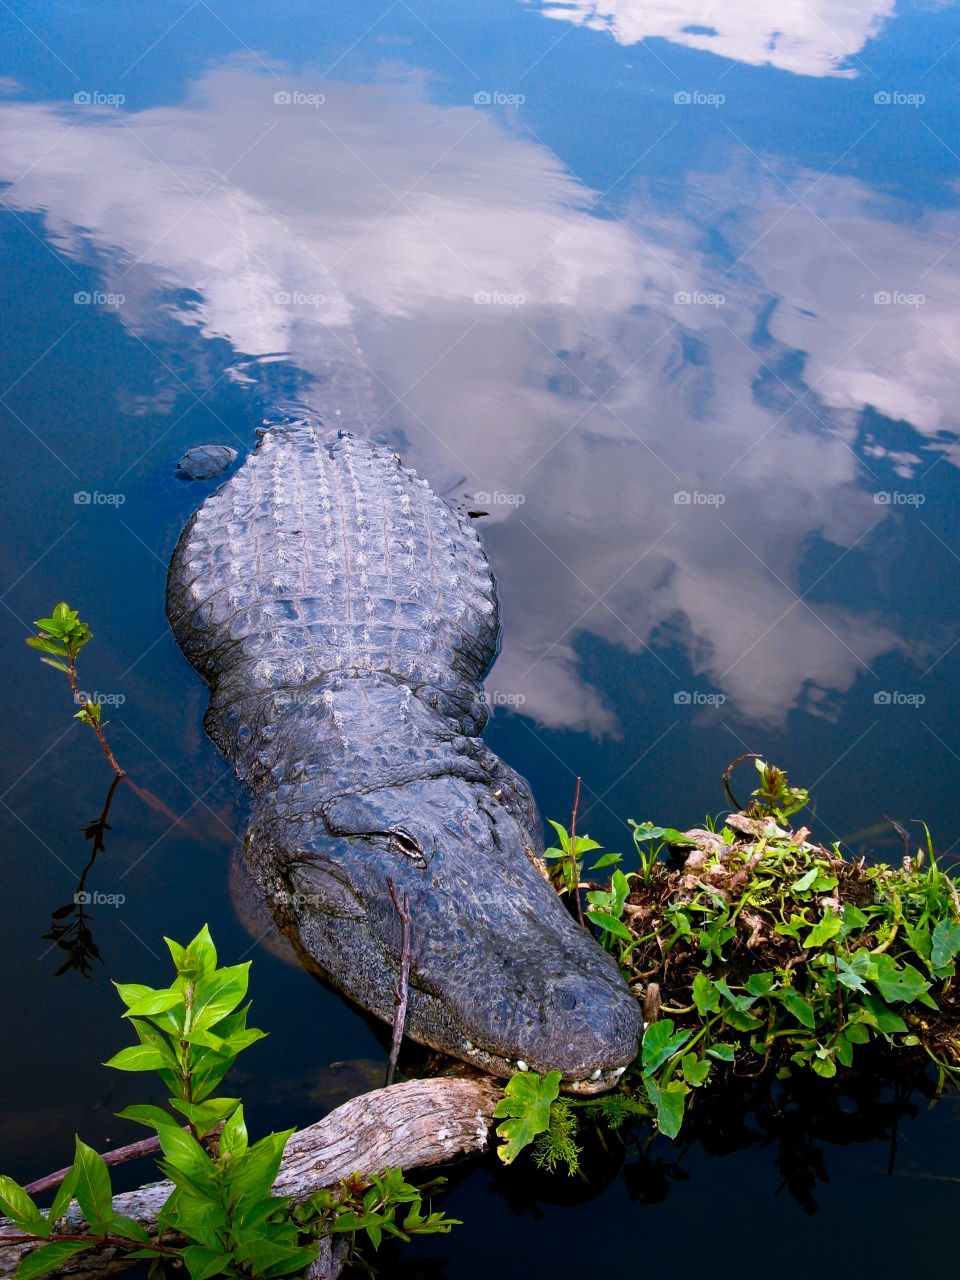 Blue sky's reflecting on Alligator